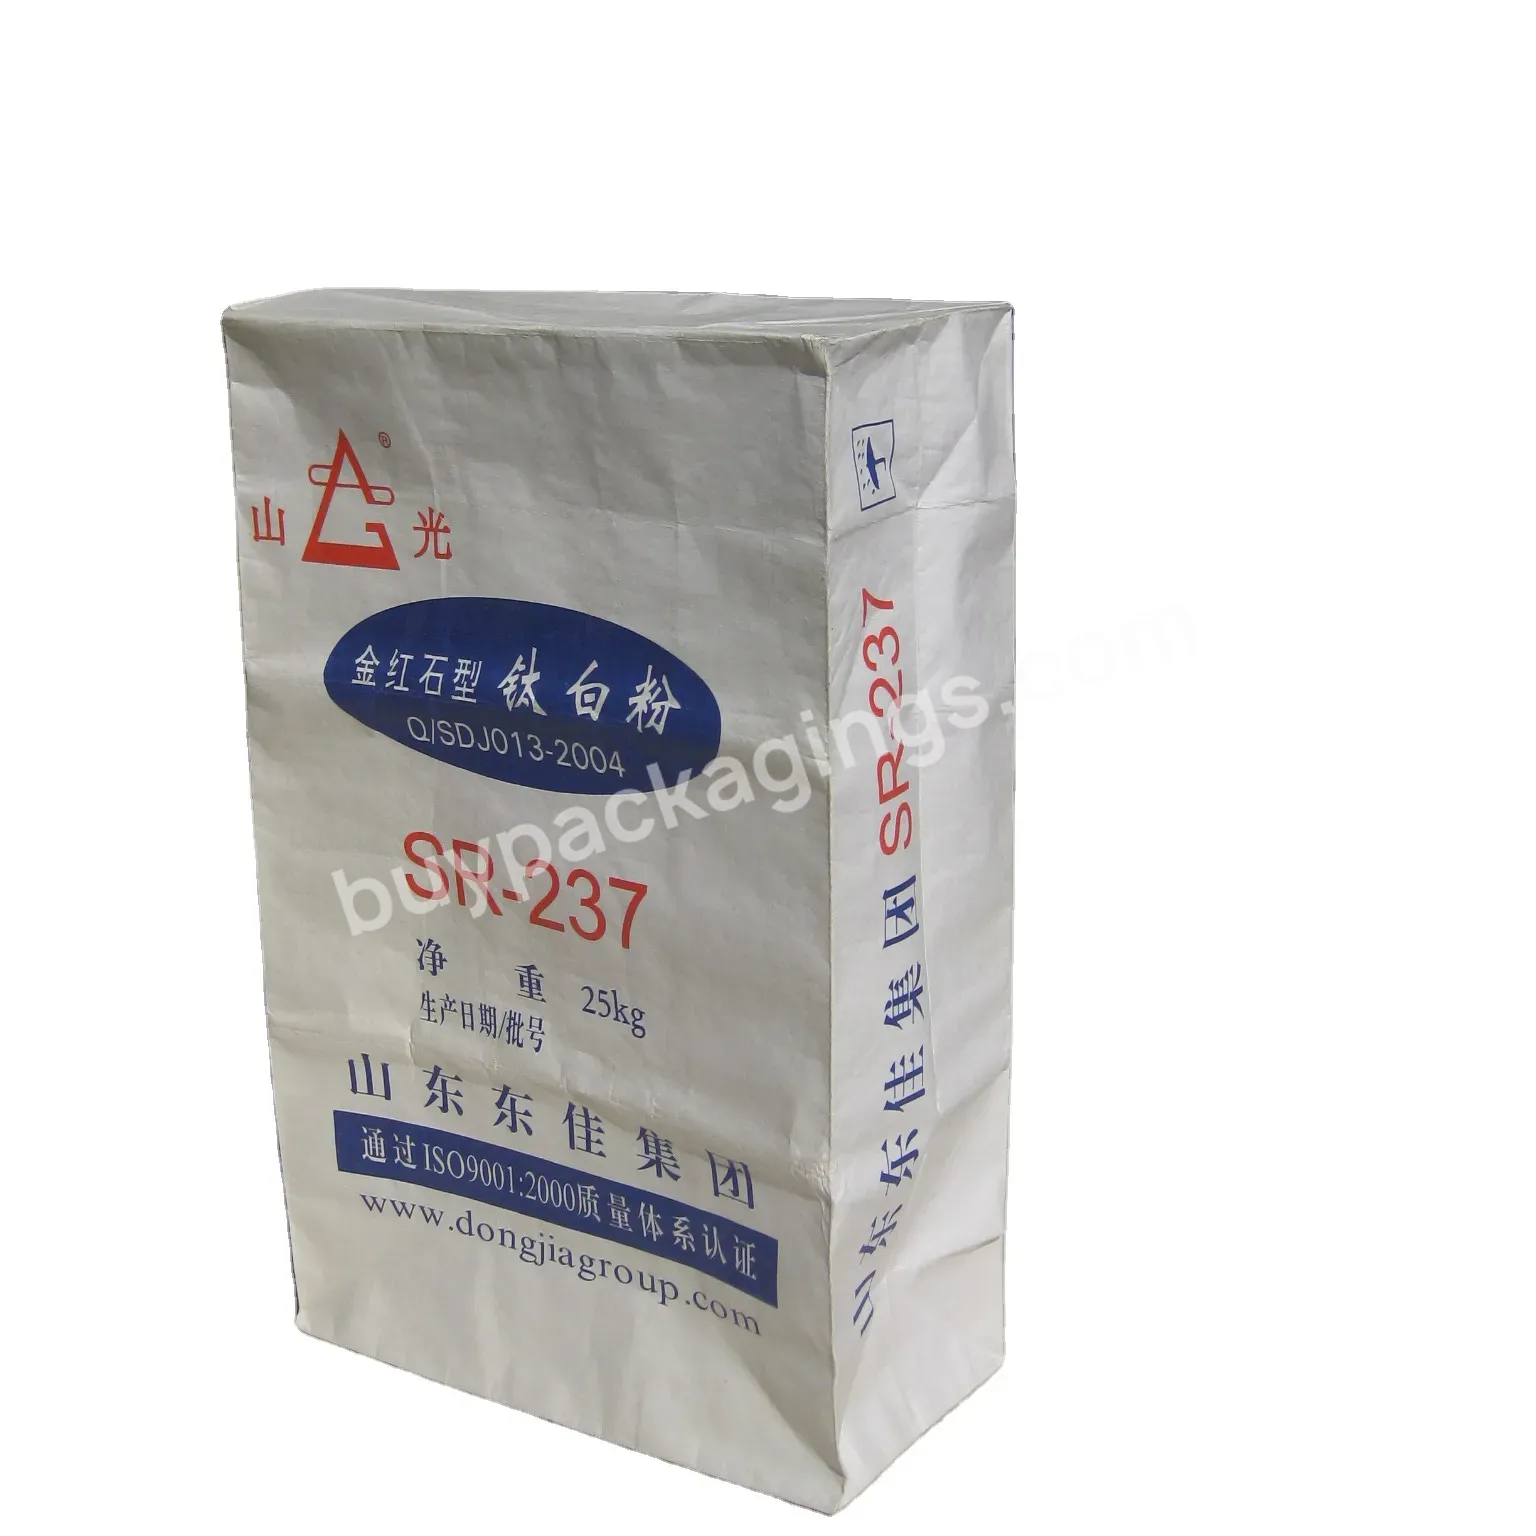 Wholesale Custom White Paper Bag Laminating Pp Woven For Flour Packaging - Buy Wholesale Custom,White Paper Bag Laminating Pp Woven,For Flour Packaging.